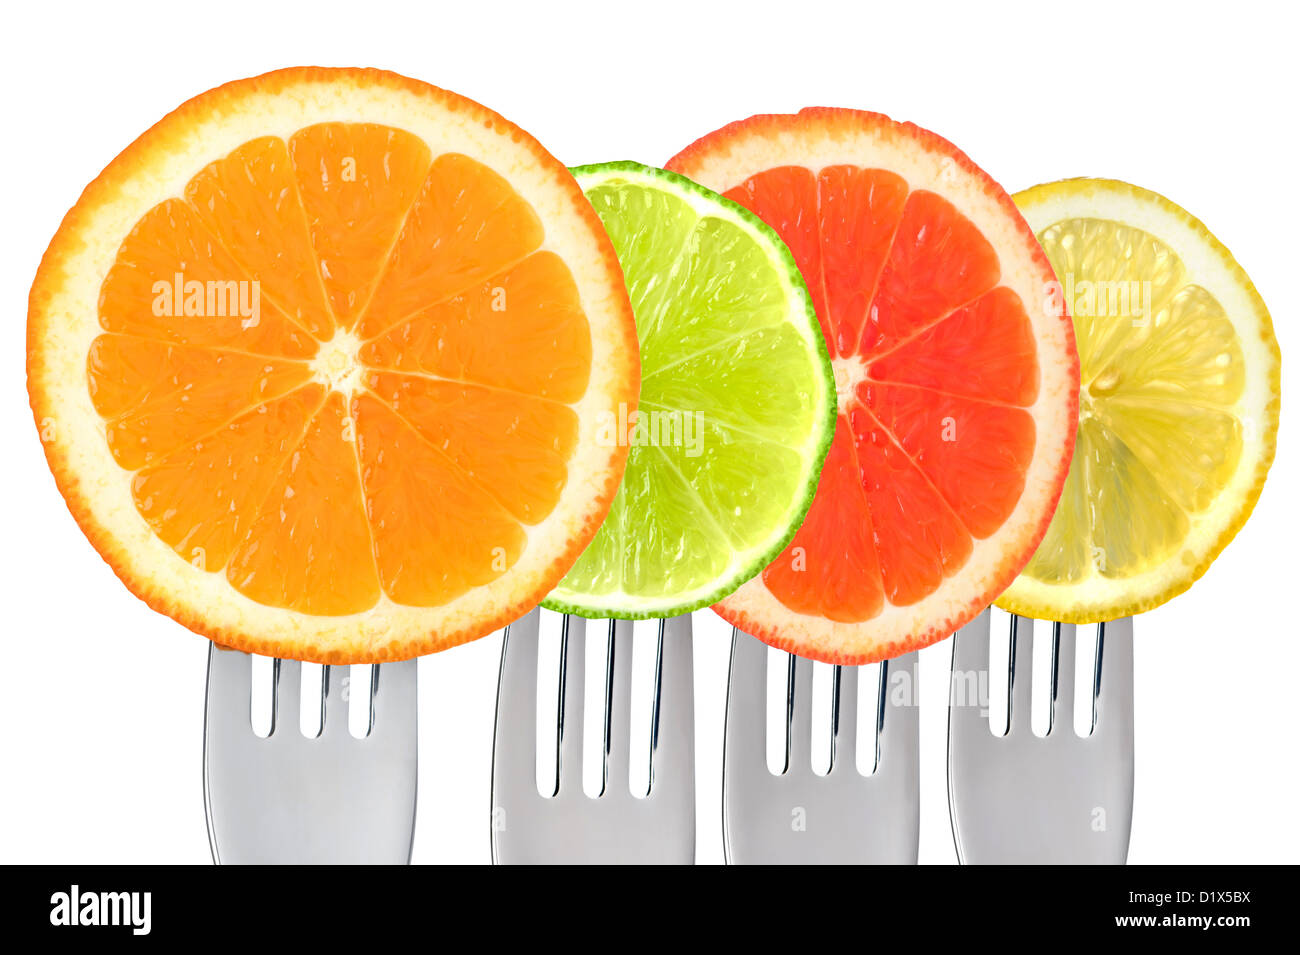 https://c8.alamy.com/comp/D1X5BX/slices-of-citrus-fruit-on-forks-orange-lime-grapefruit-lemon-isolated-D1X5BX.jpg